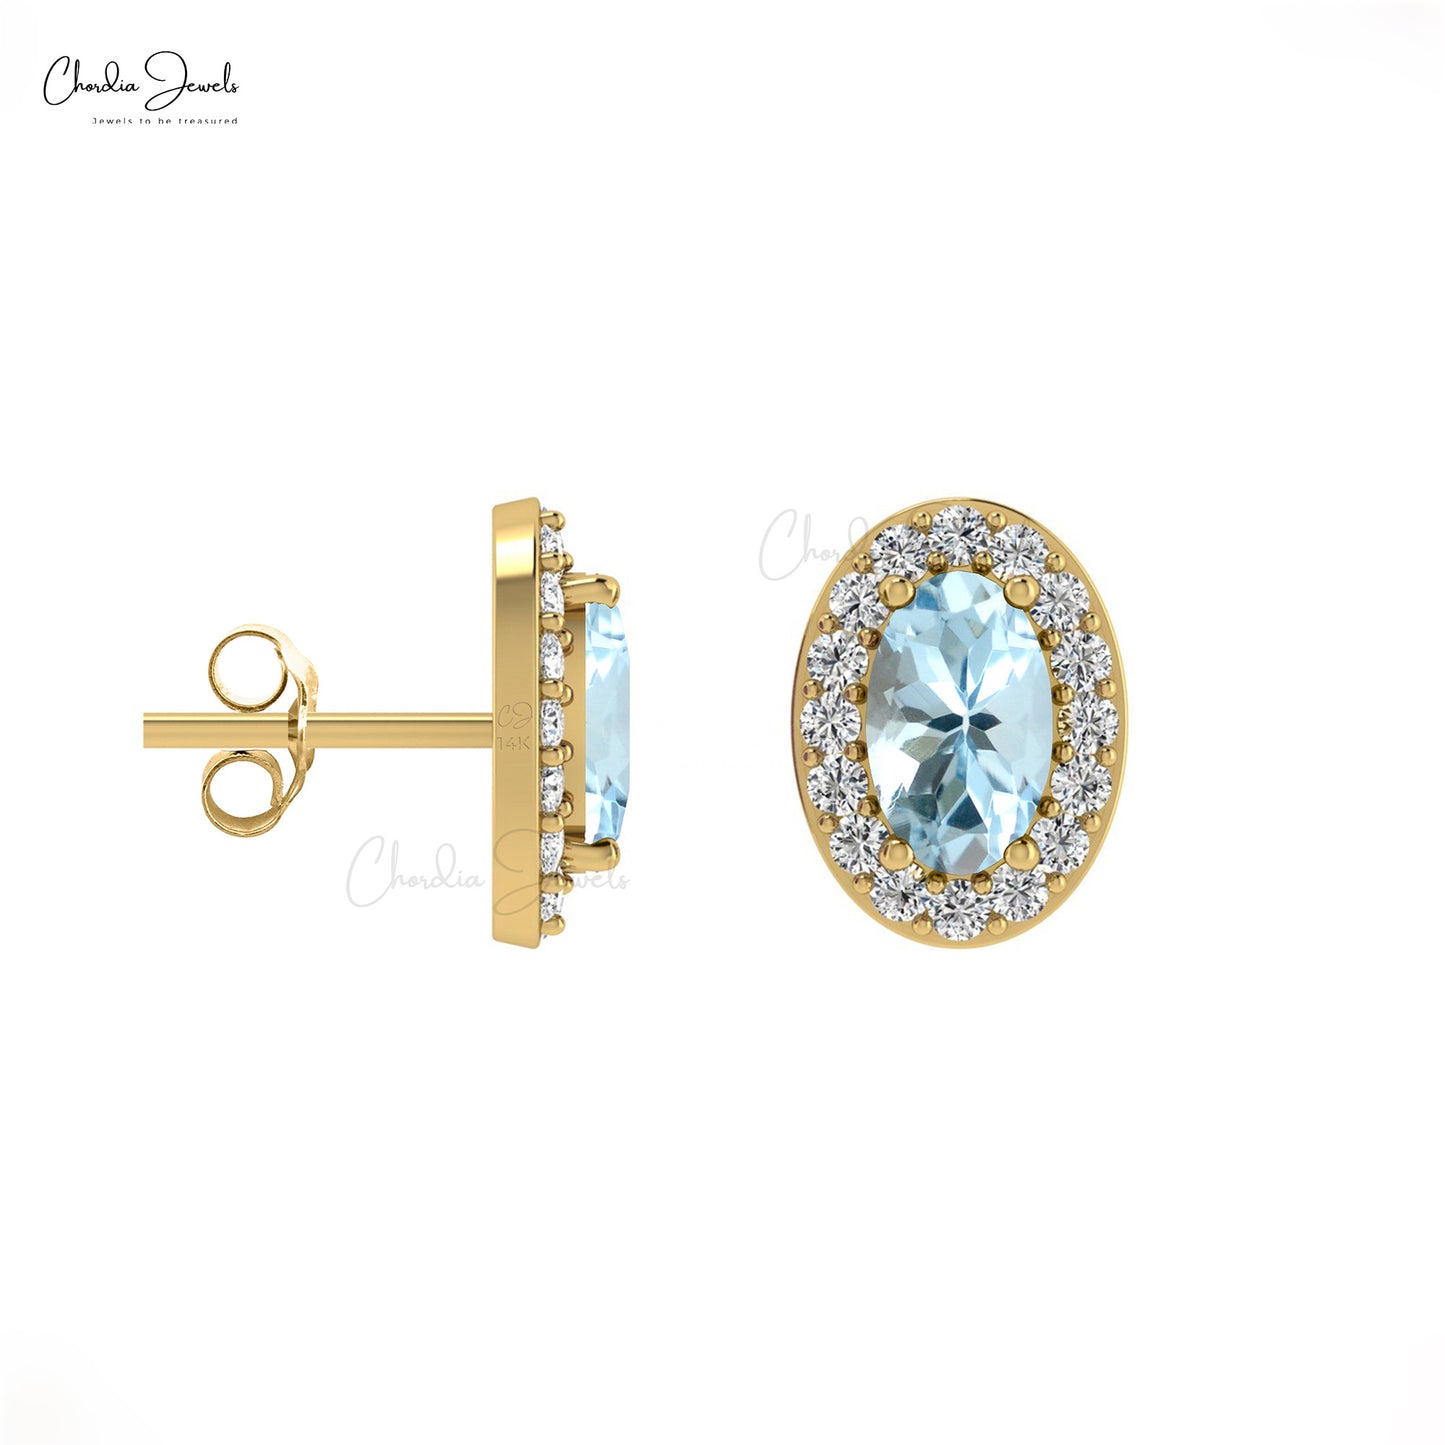 Genuine 14K Gold Oval Aquamarine & White Diamond Halo Earrings